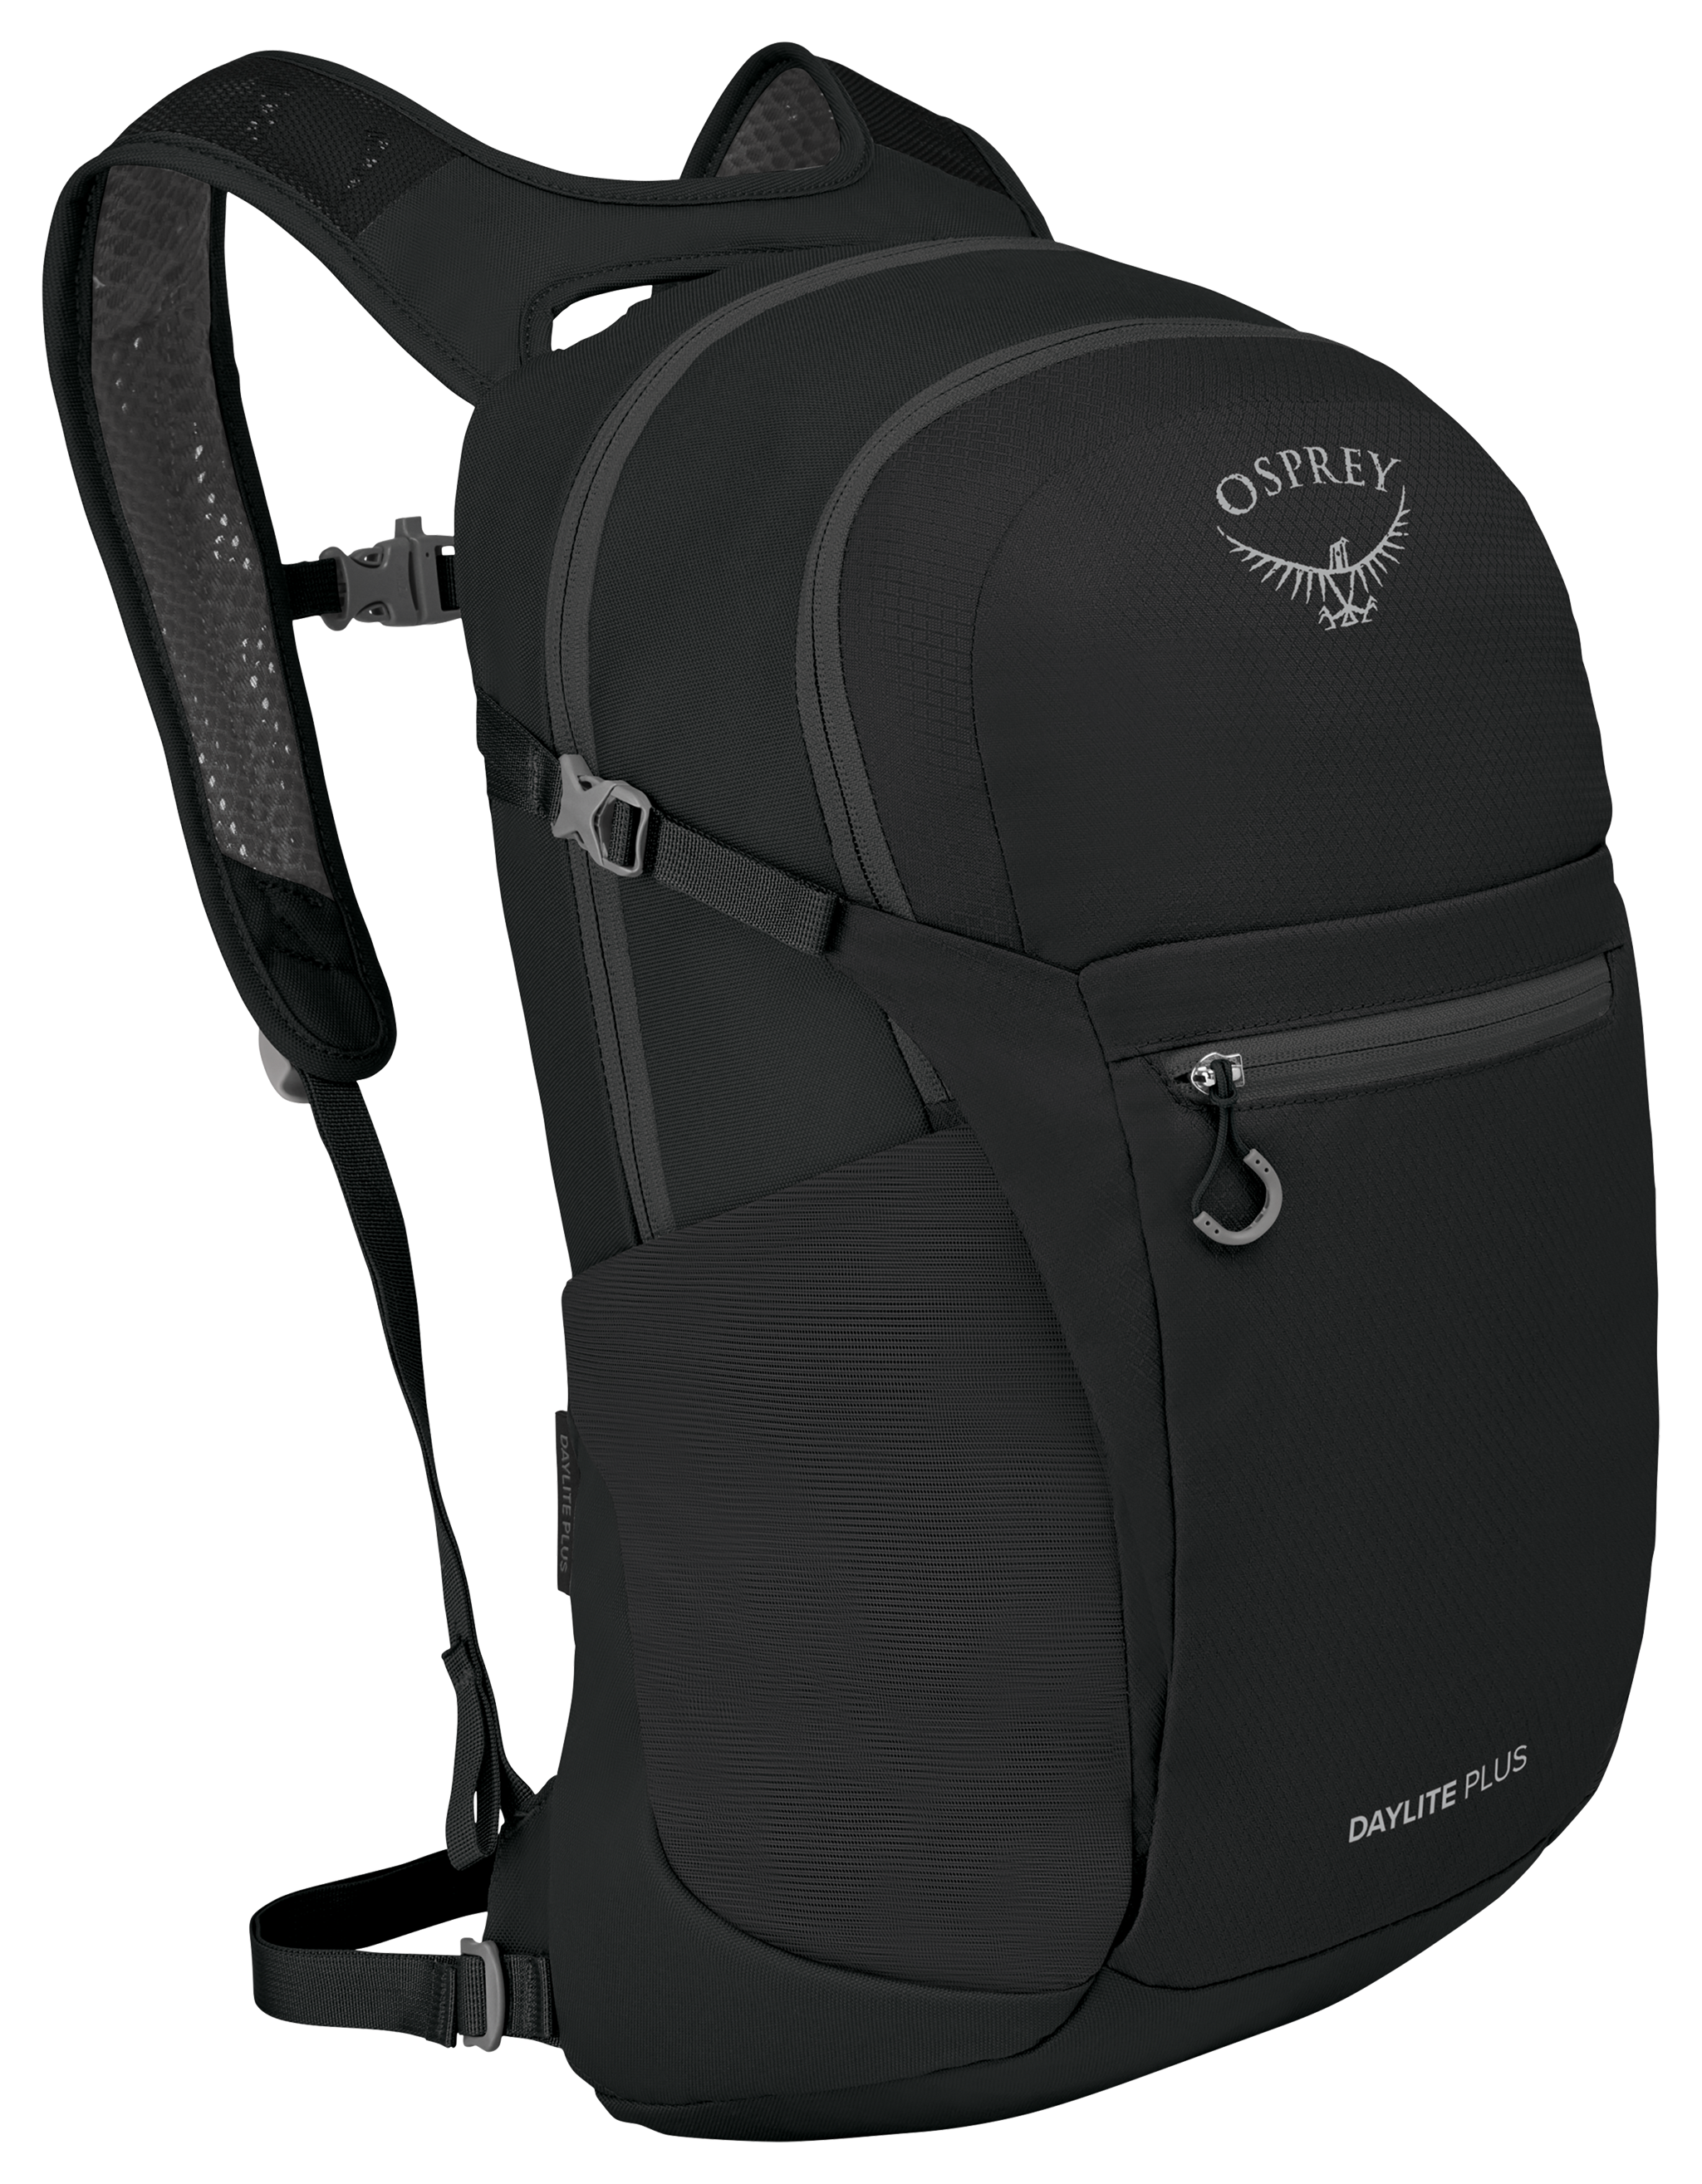 Zin gunstig licentie Osprey Daylite Plus Hiking Backpack | Bass Pro Shops